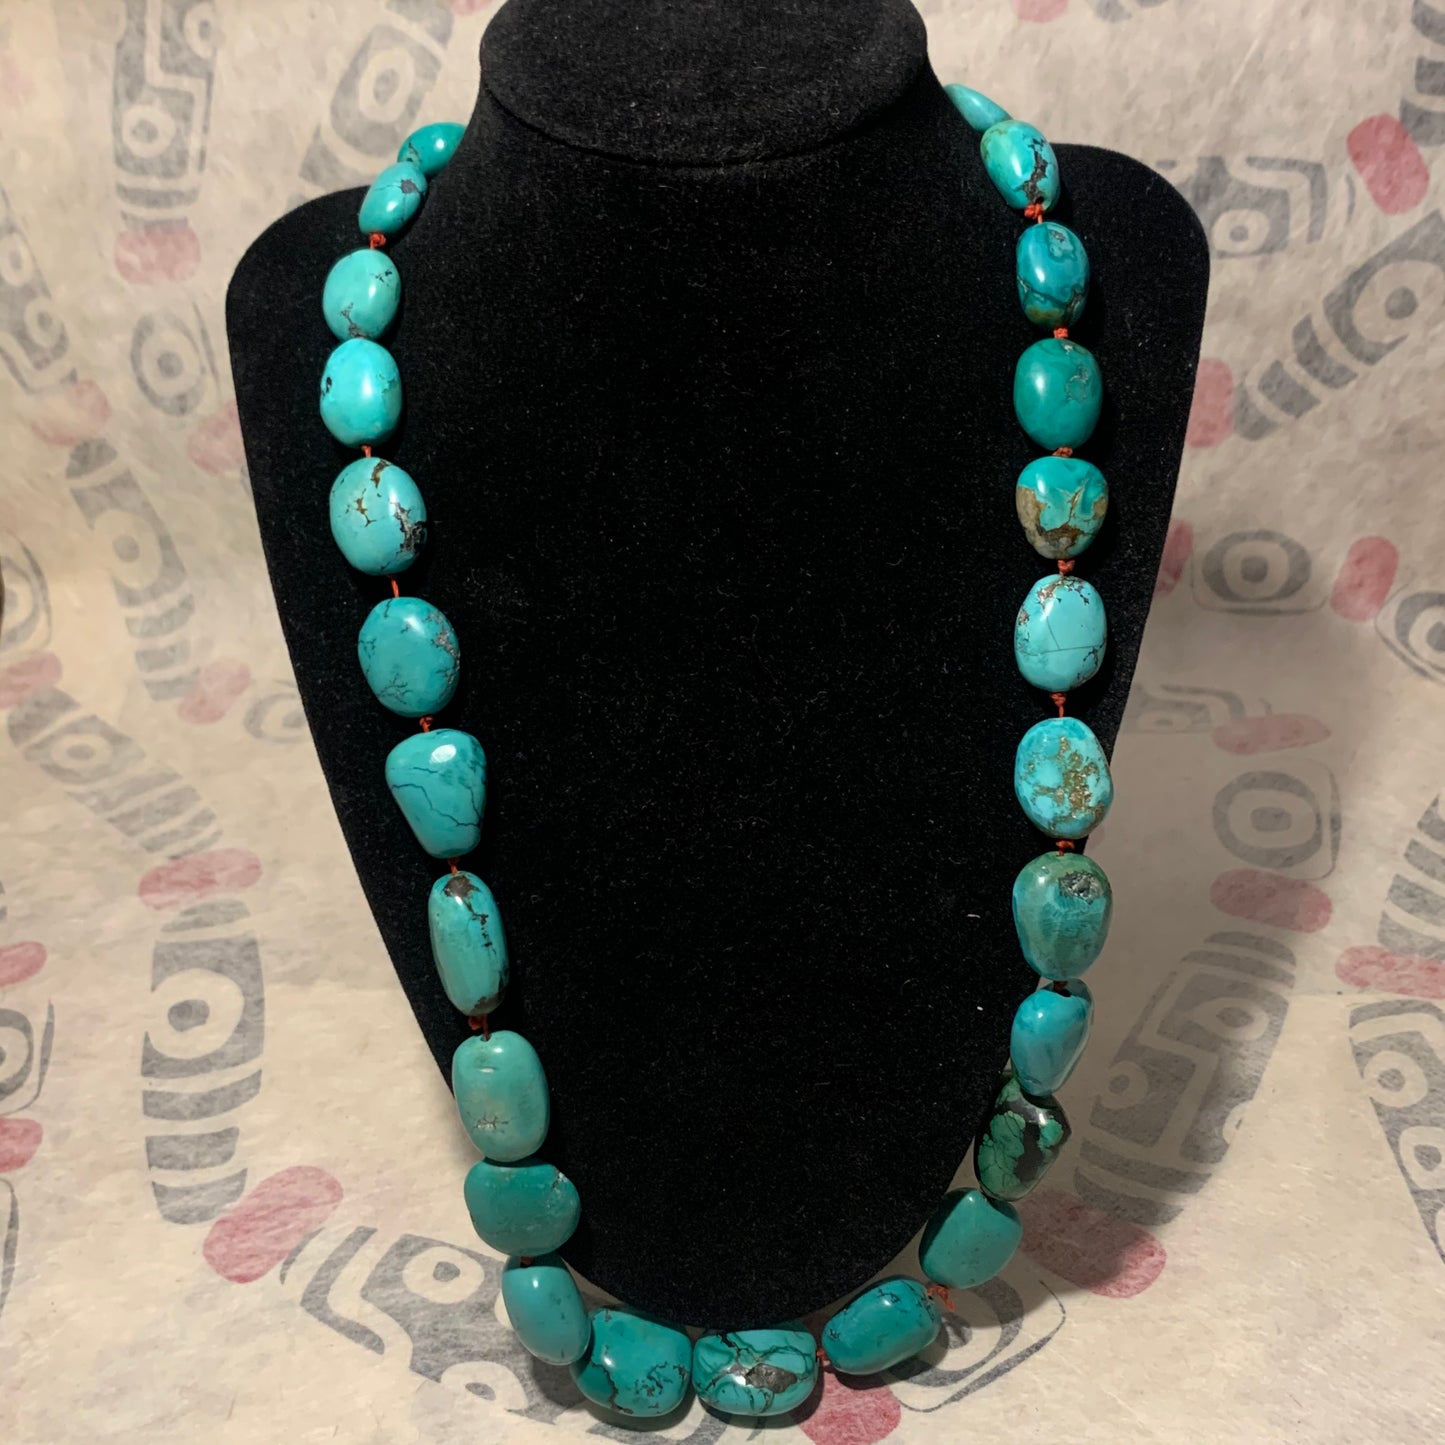 Antique Tibetan Turquoise bead necklace